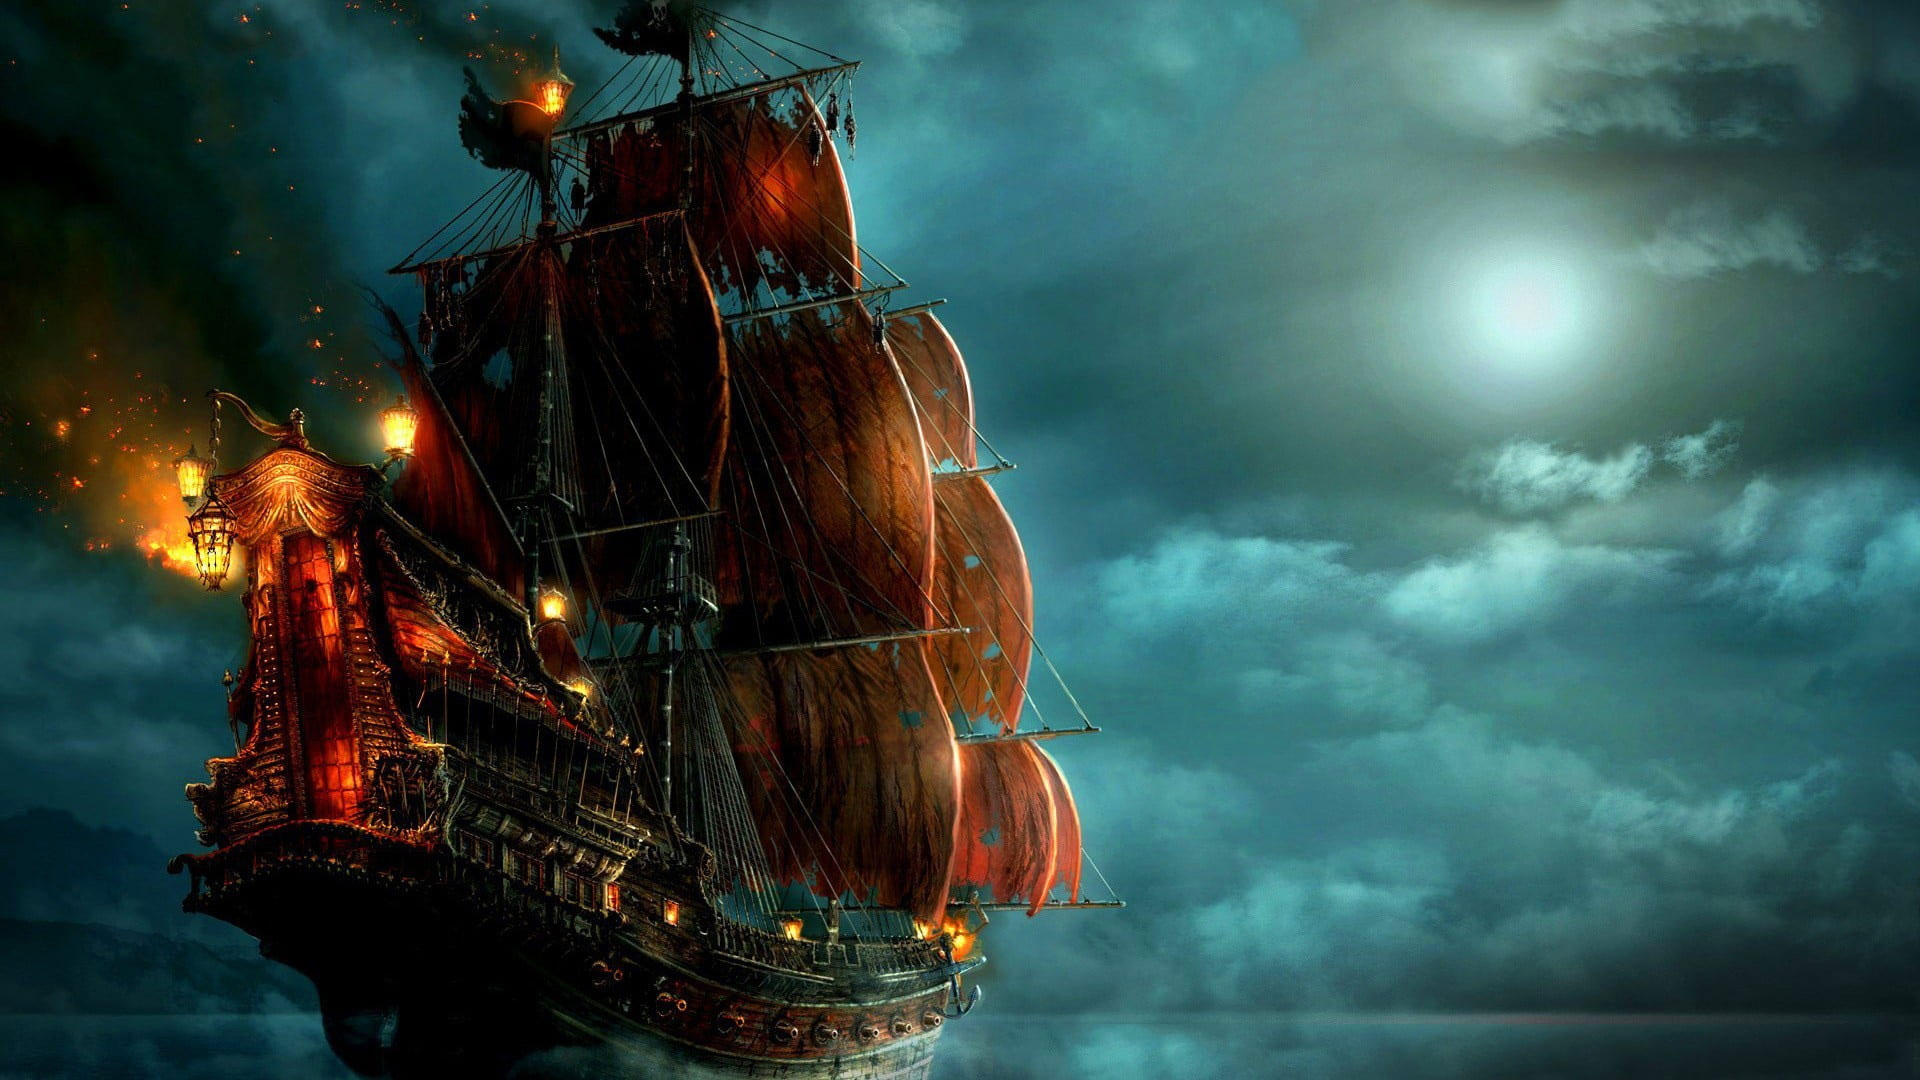 Black and red pirate ship wallpaper, pirates, night, sailing ship